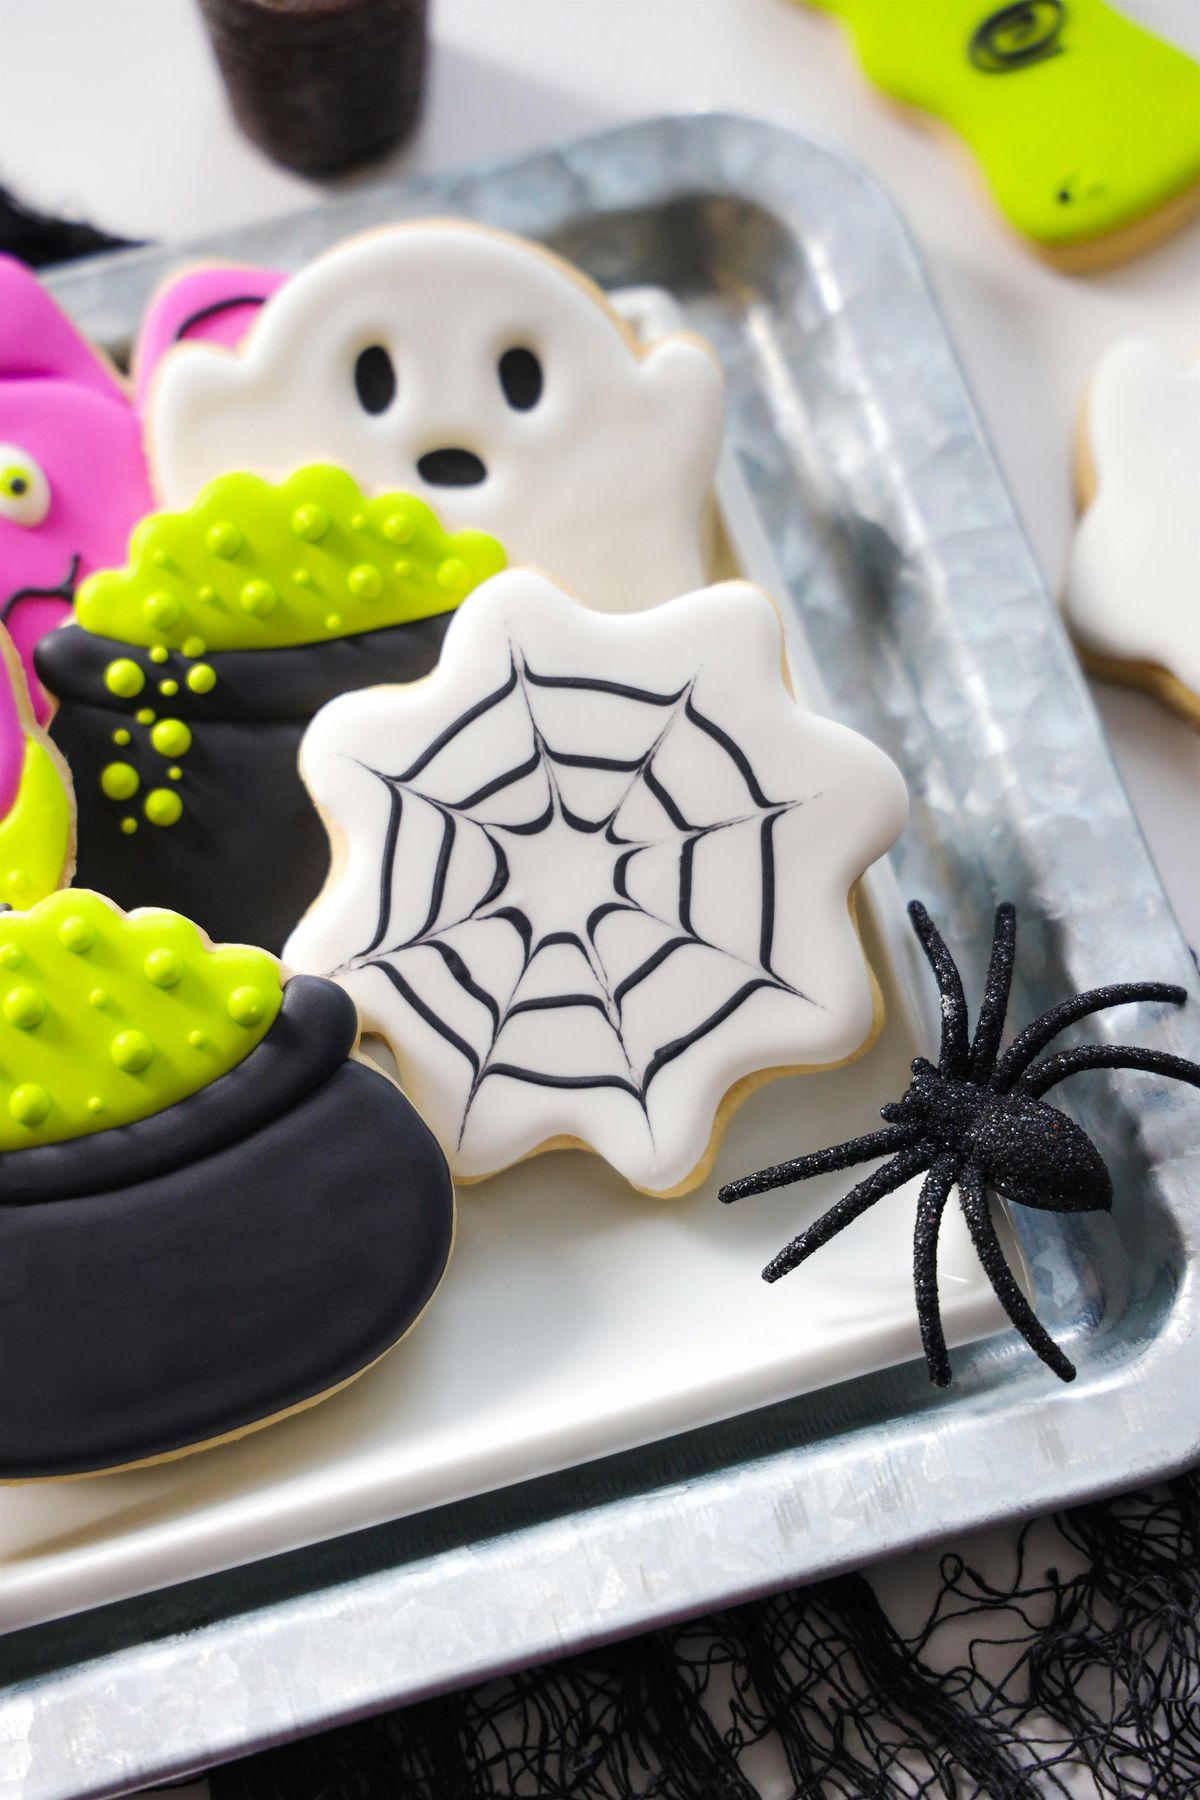 Haunted Halloween - Spooky Sugar Cookie Decorating Class!